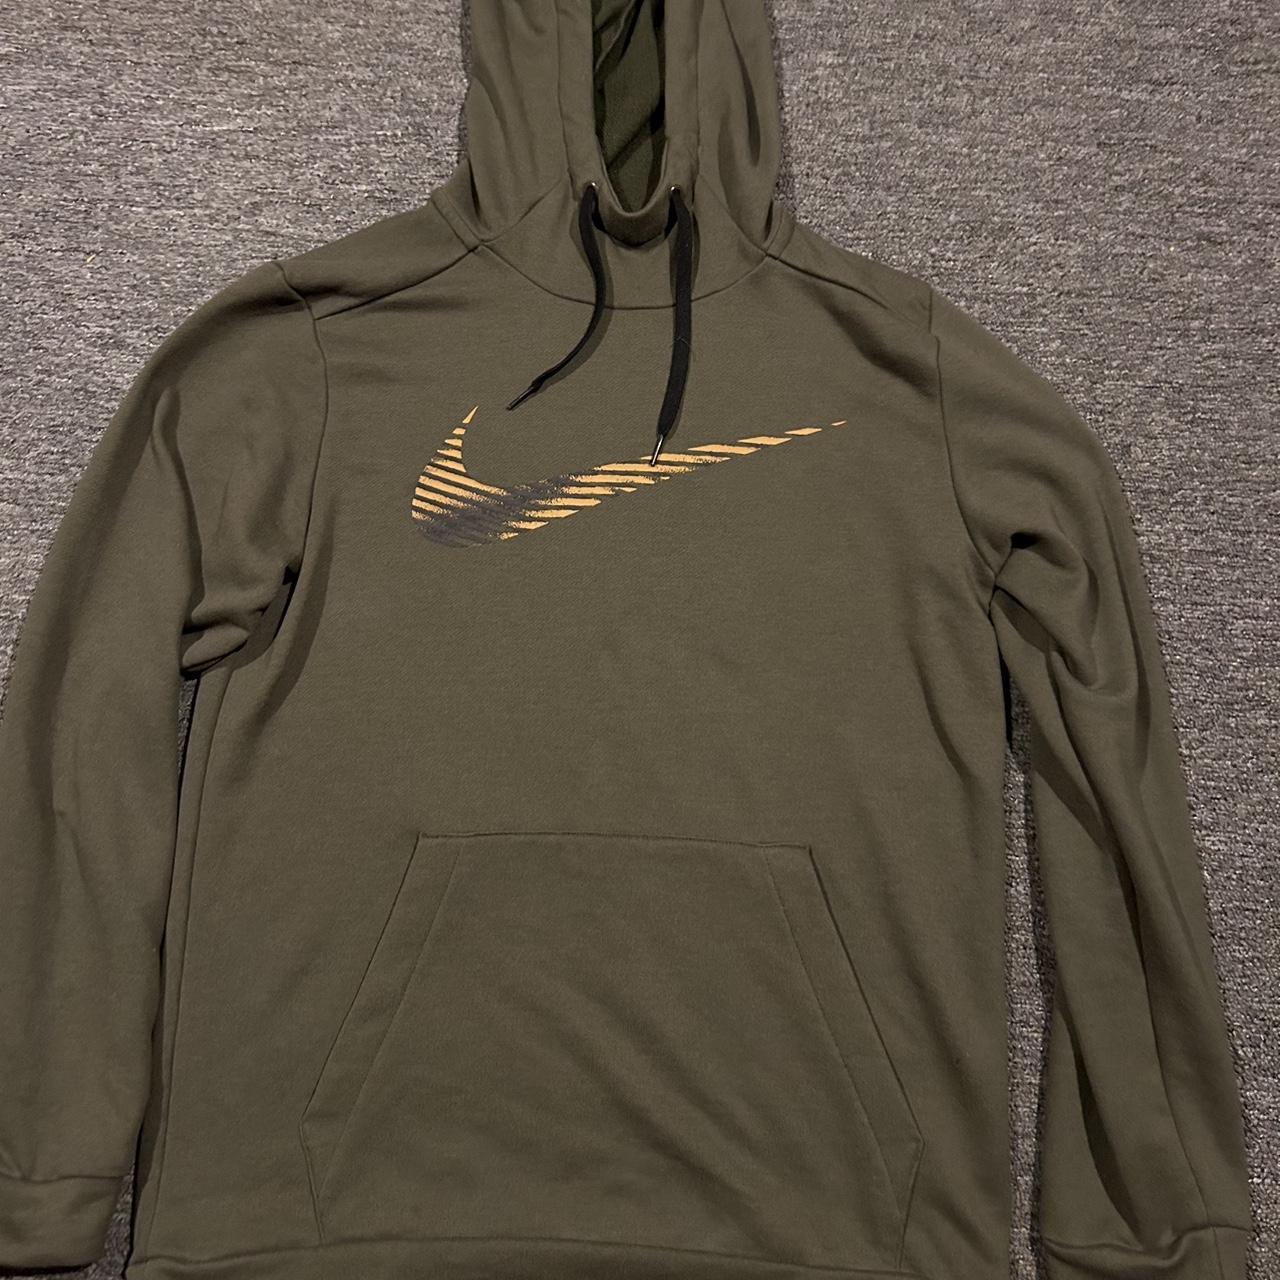 Nike Dri-fit hoodie in khaki colourway Size... - Depop